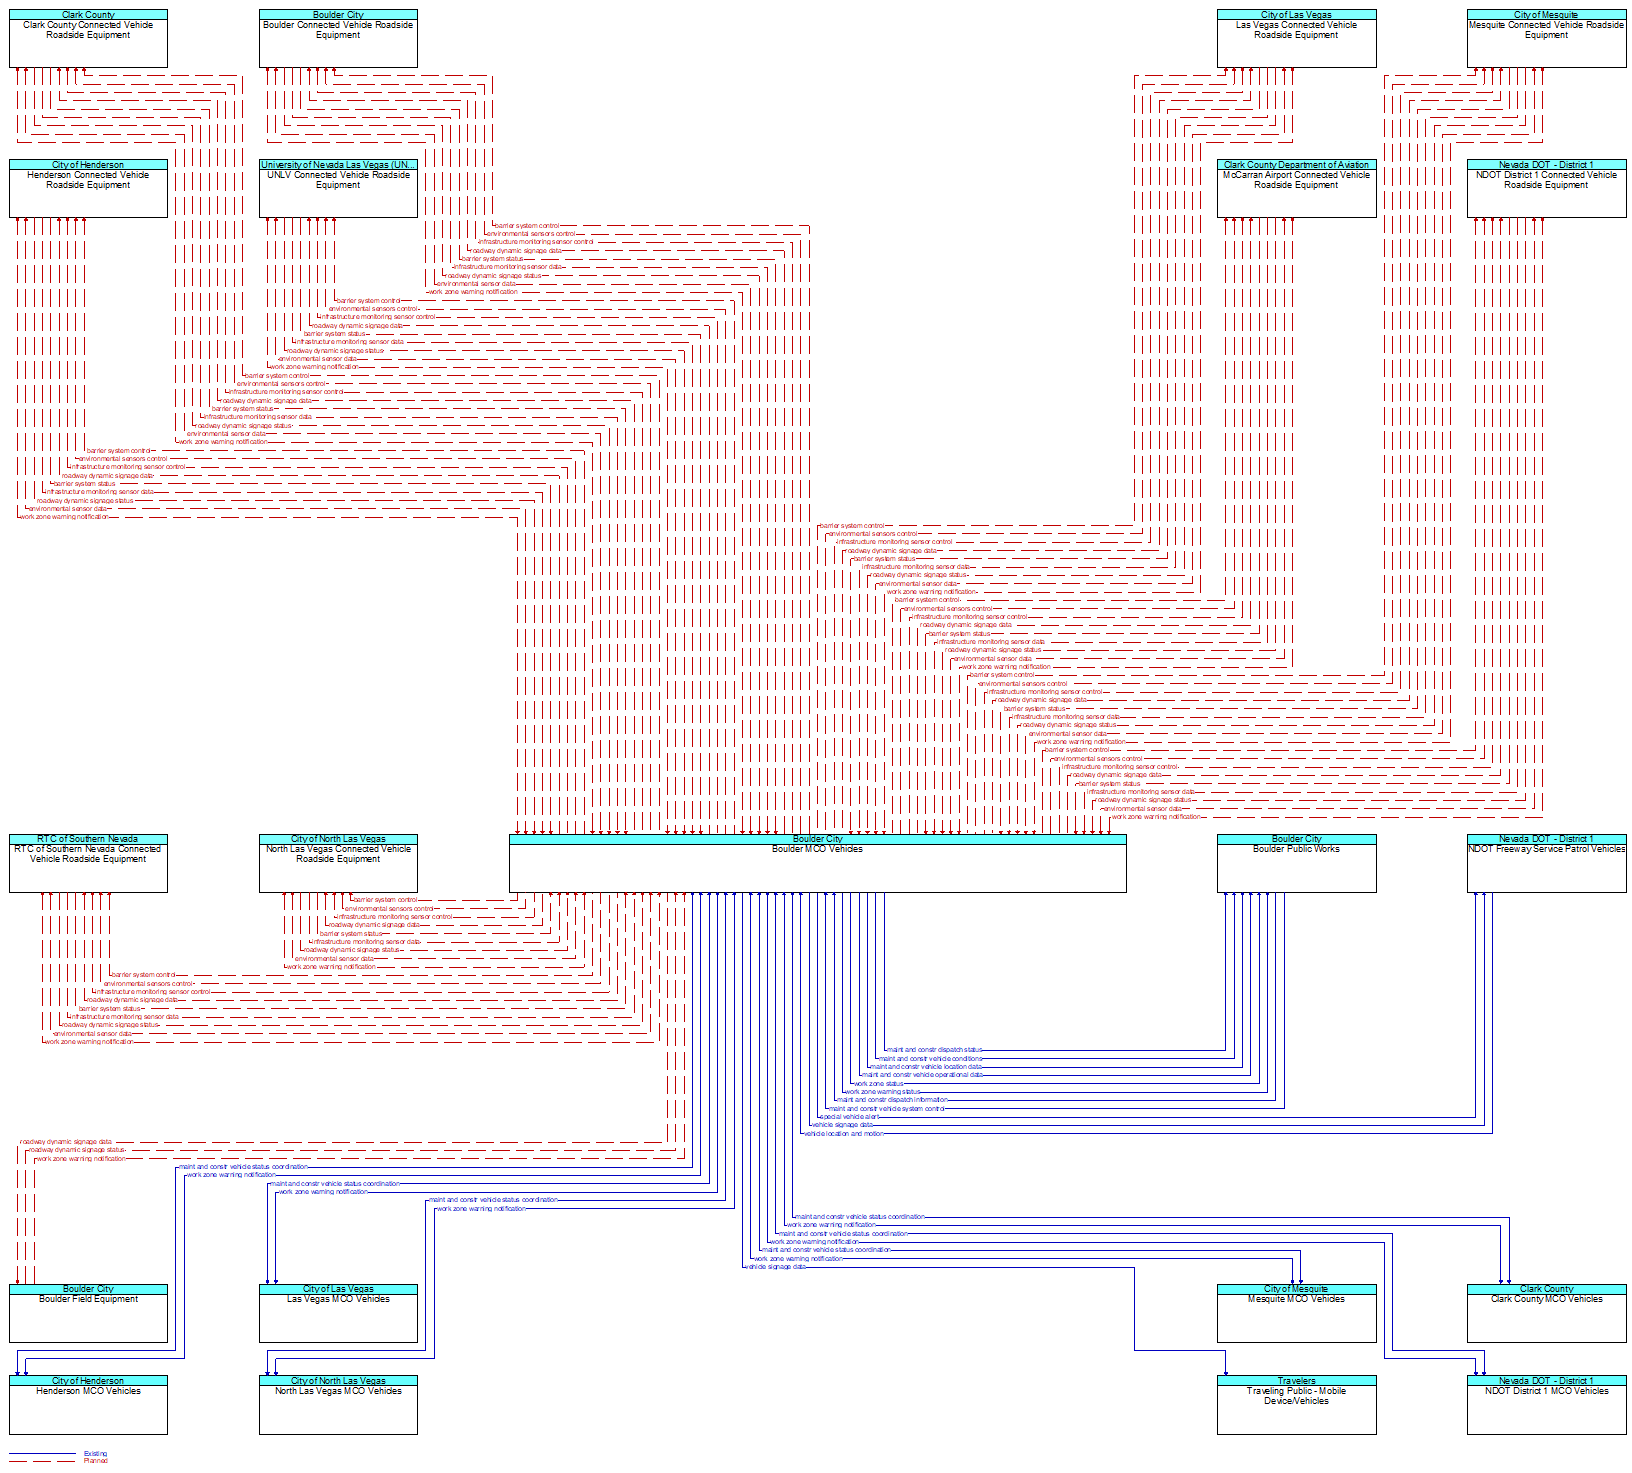 Context Diagram - Boulder MCO Vehicles